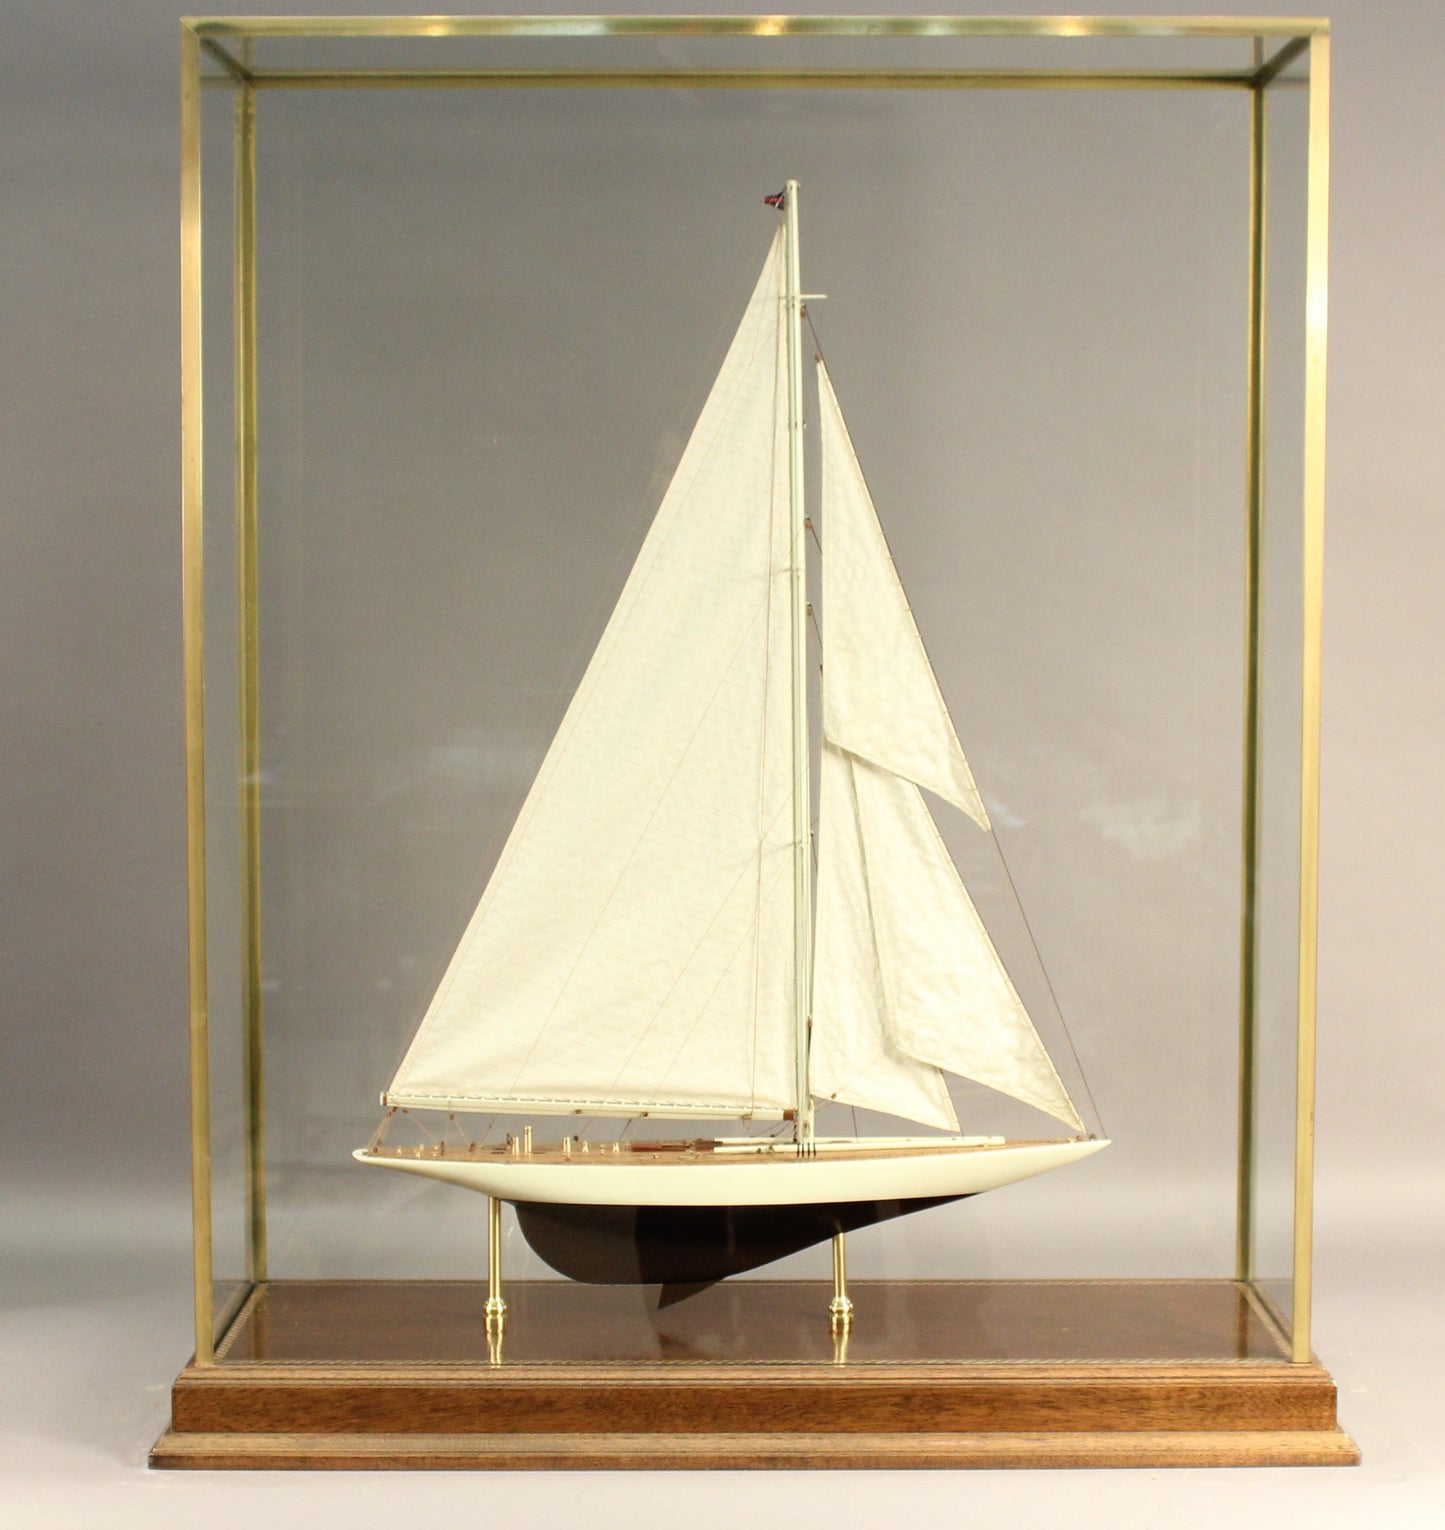 Enterprise | America's Cup Yacht | 1930 - Lannan Gallery